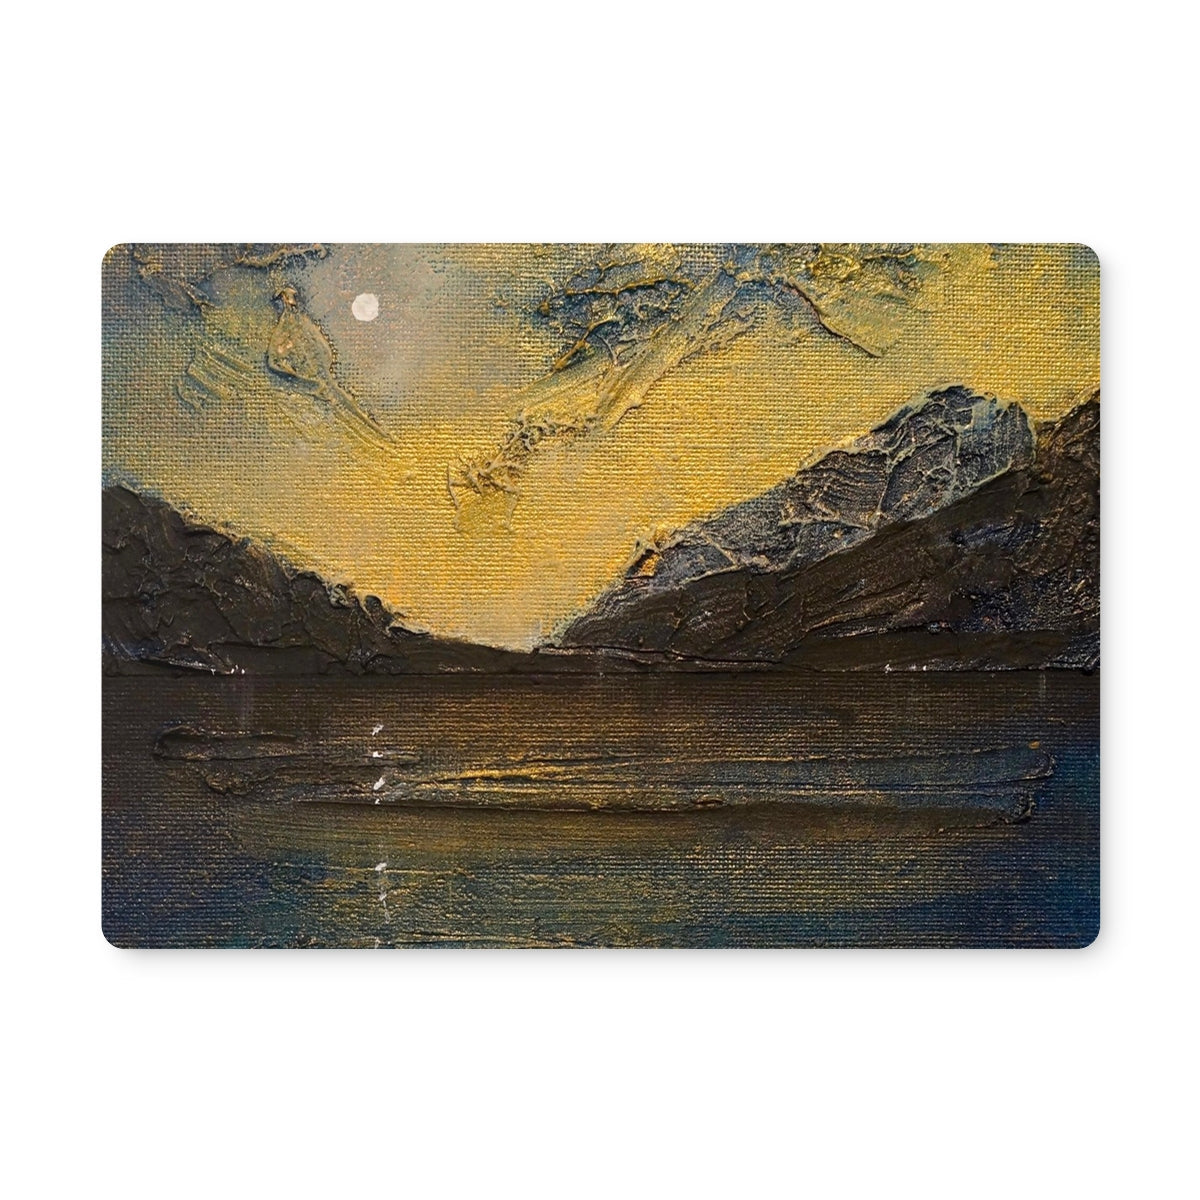 Loch Lomond Moonlight Art Gifts Placemat